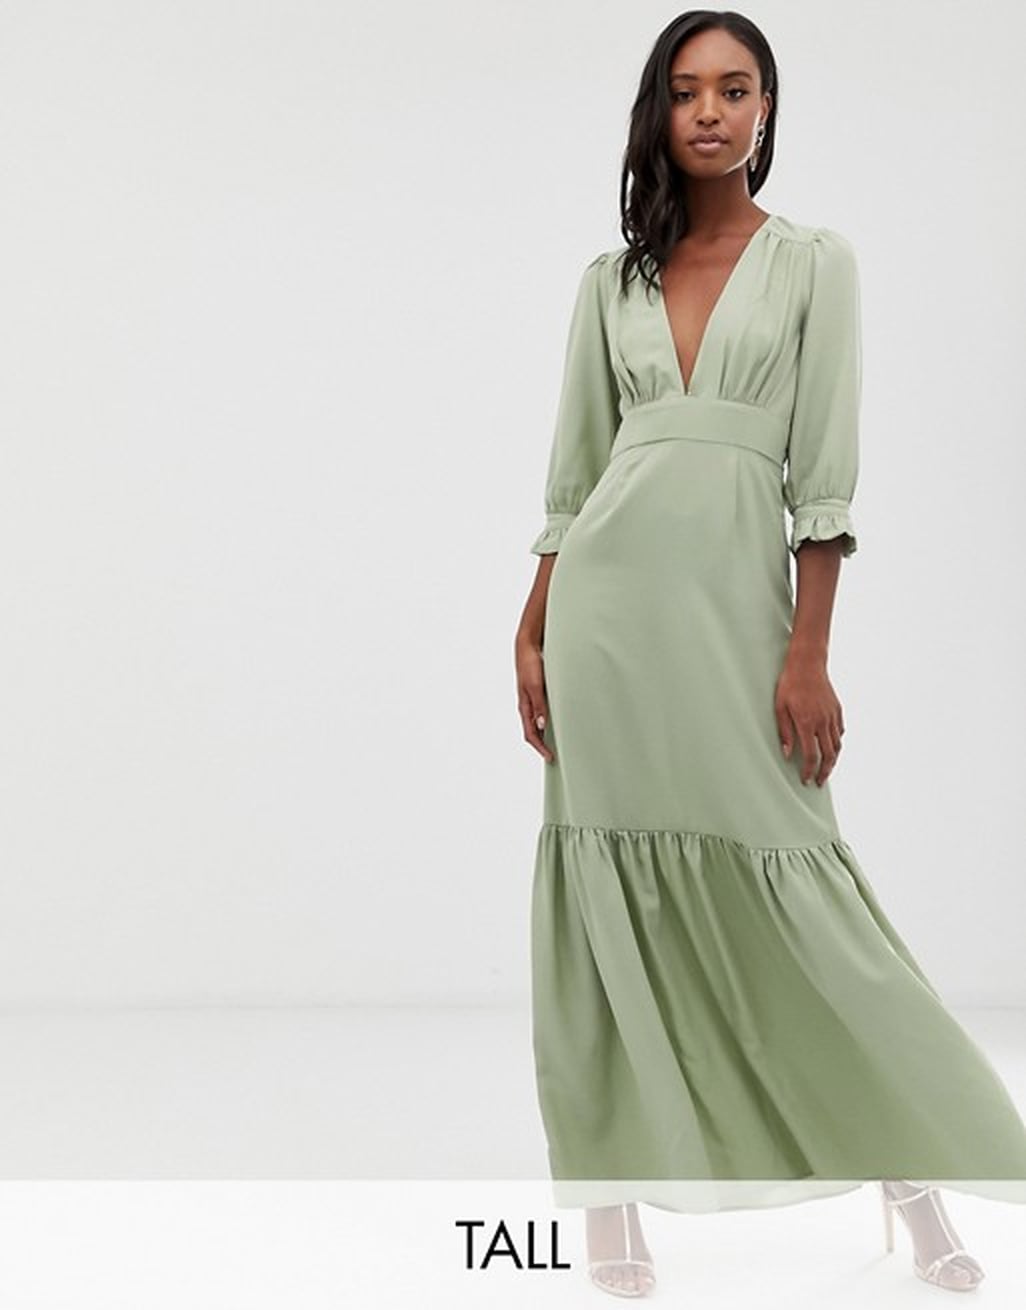 Ashley Graham Green Marina Rinaldi Maternity Dress | POPSUGAR Fashion